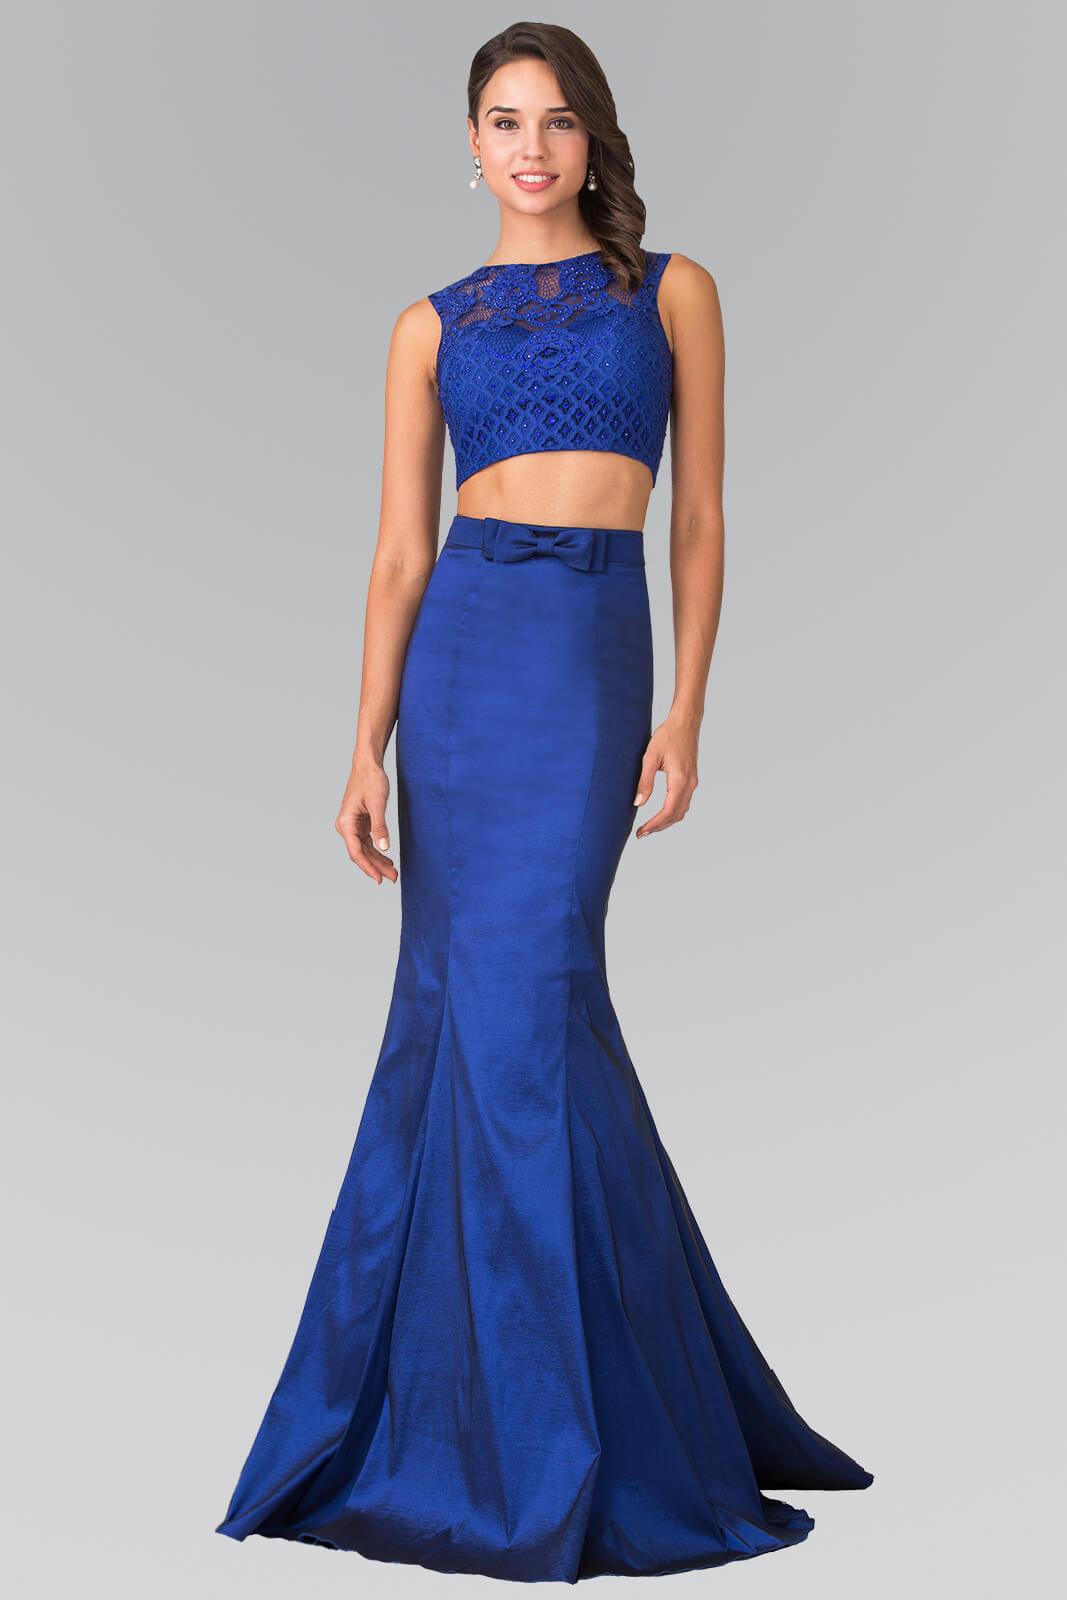 Prom Two Piece Taffeta Formal Dress Evening Long Gown - The Dress Outlet Elizabeth K